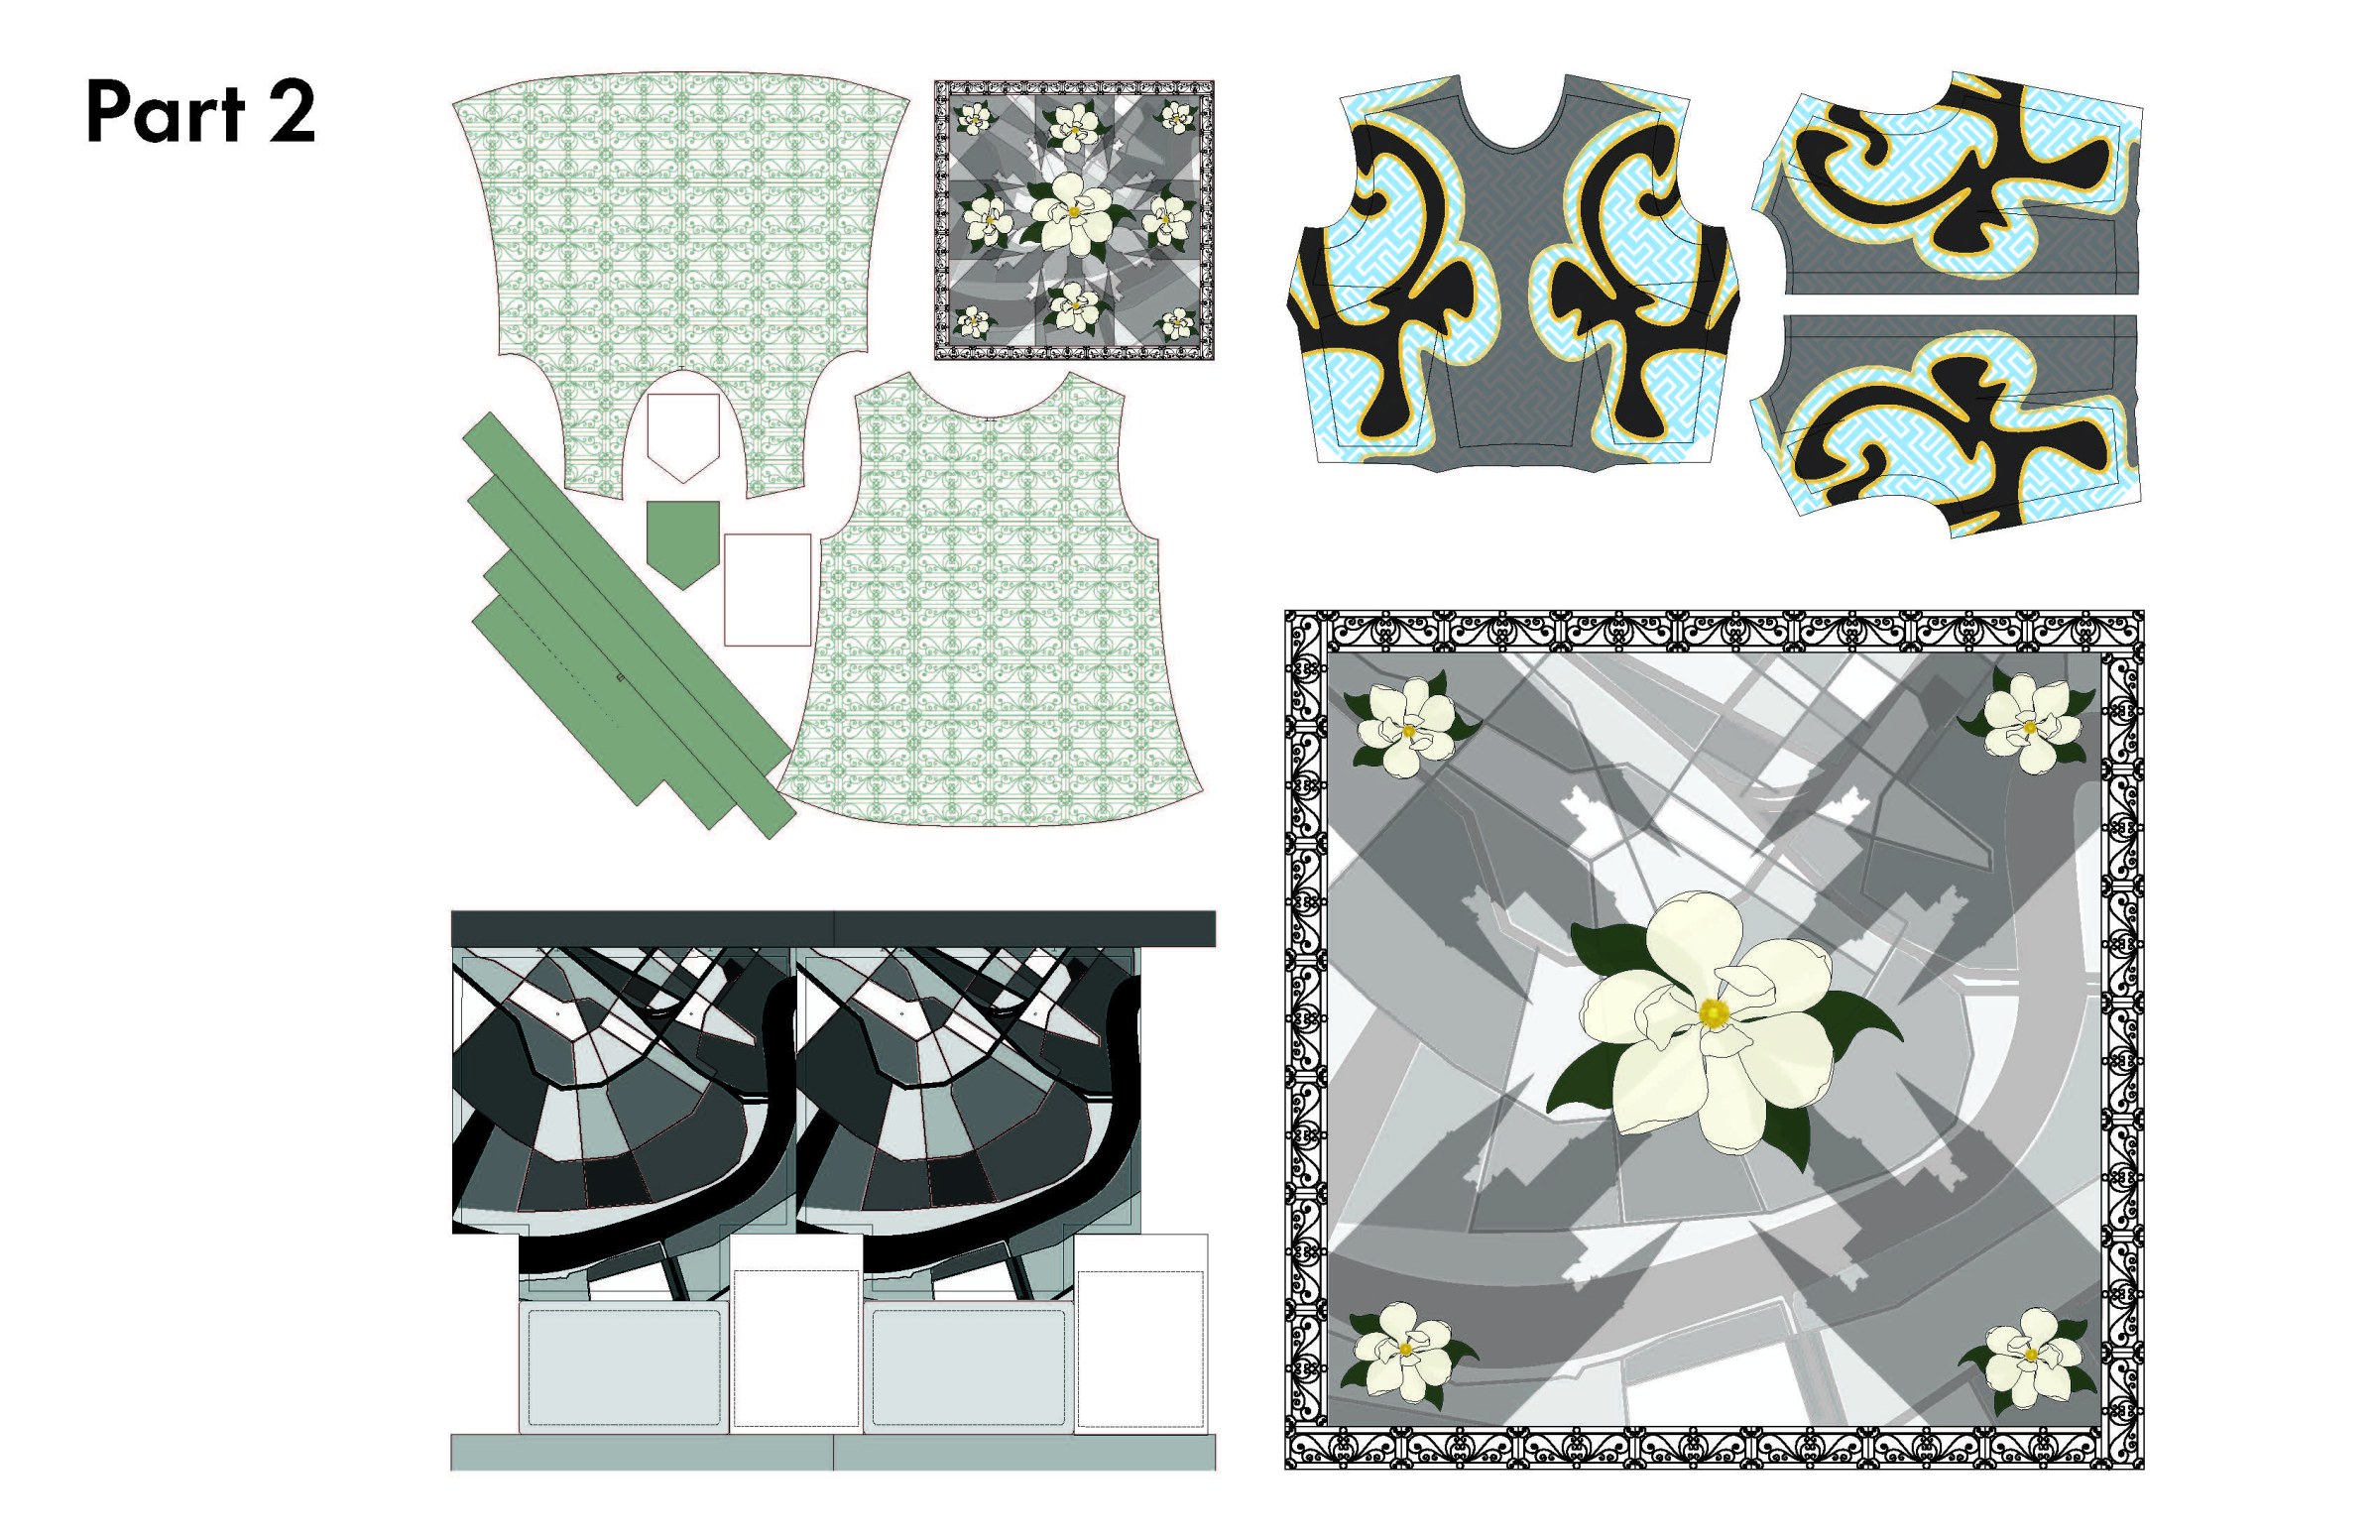 Textile Design Studio student's design process